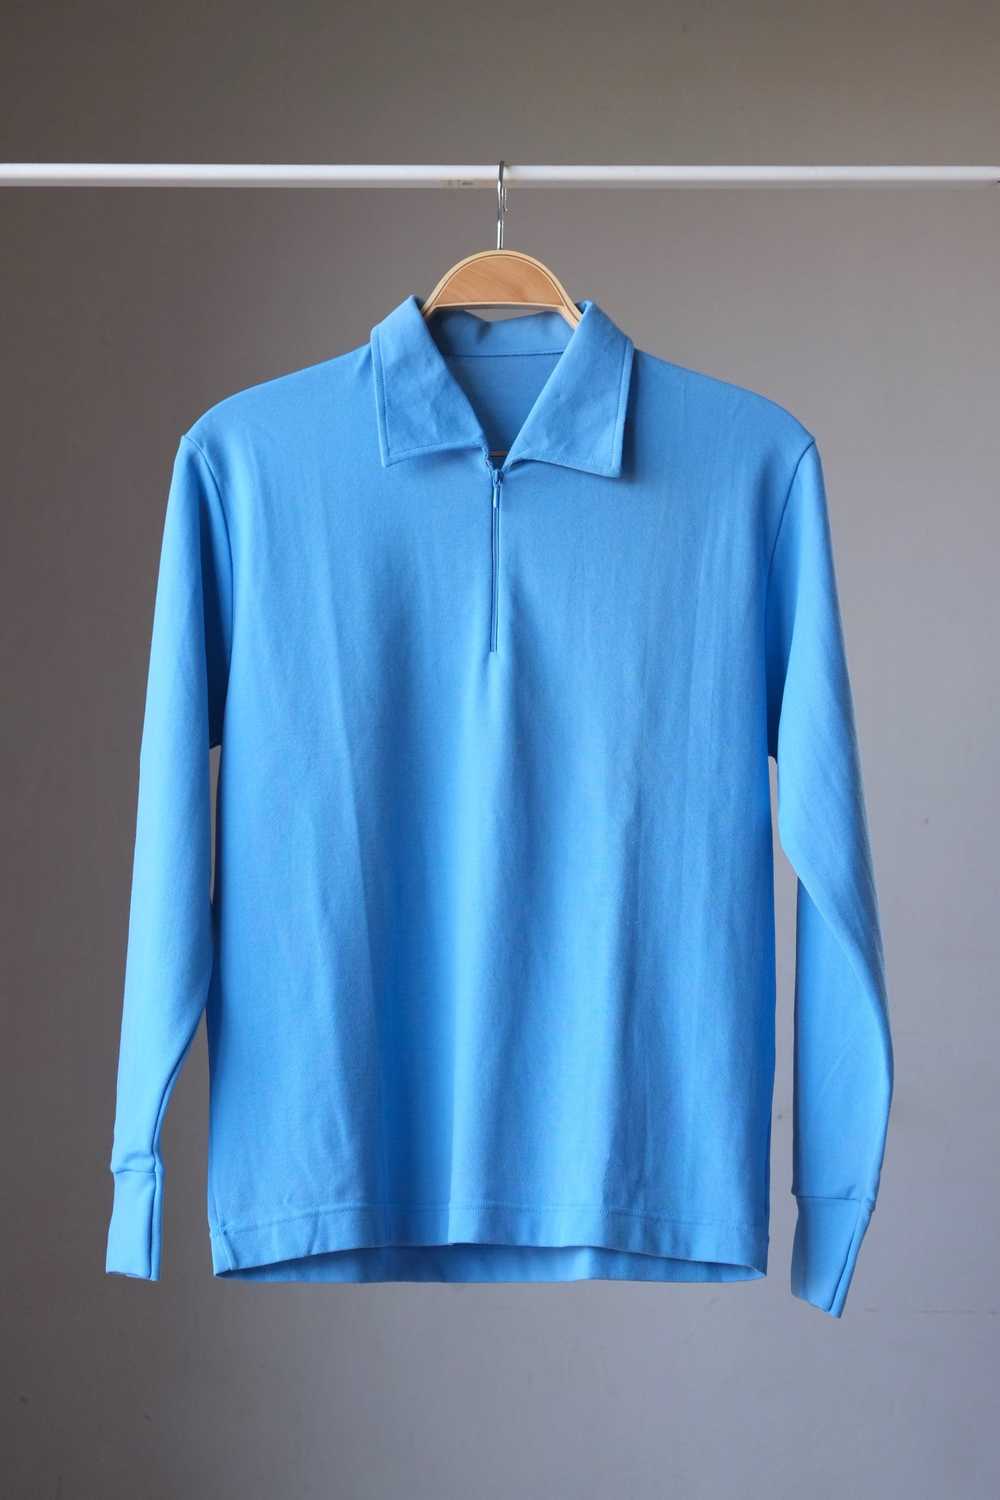 ZOFINA Long Sleeves 70s Polo Shirt - image 3